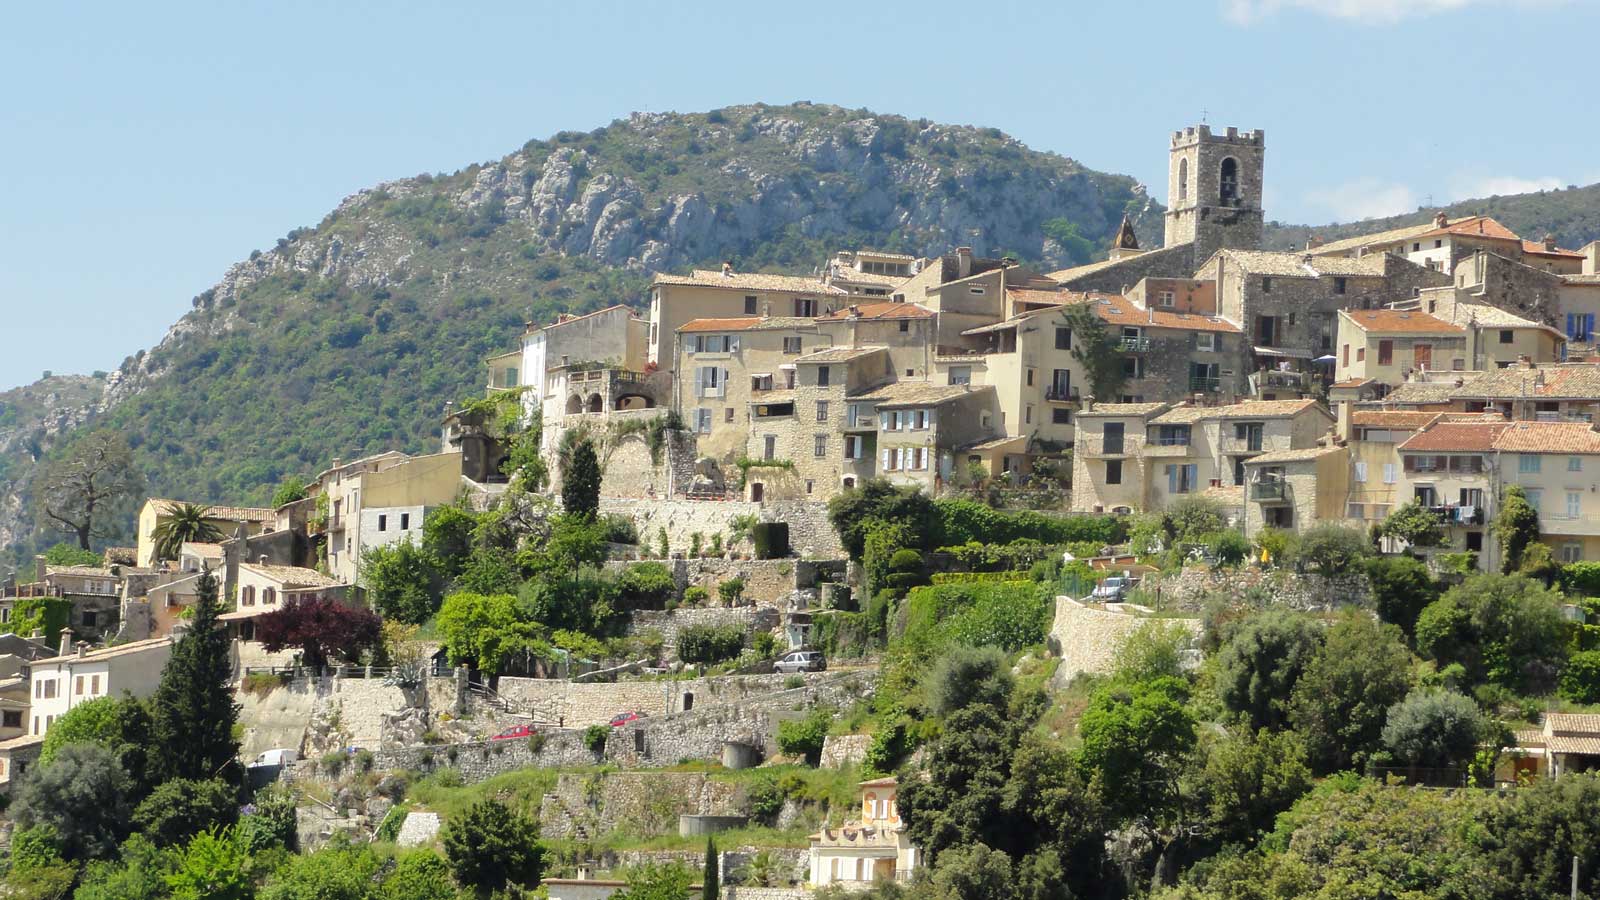 The village of Saint Jeannet